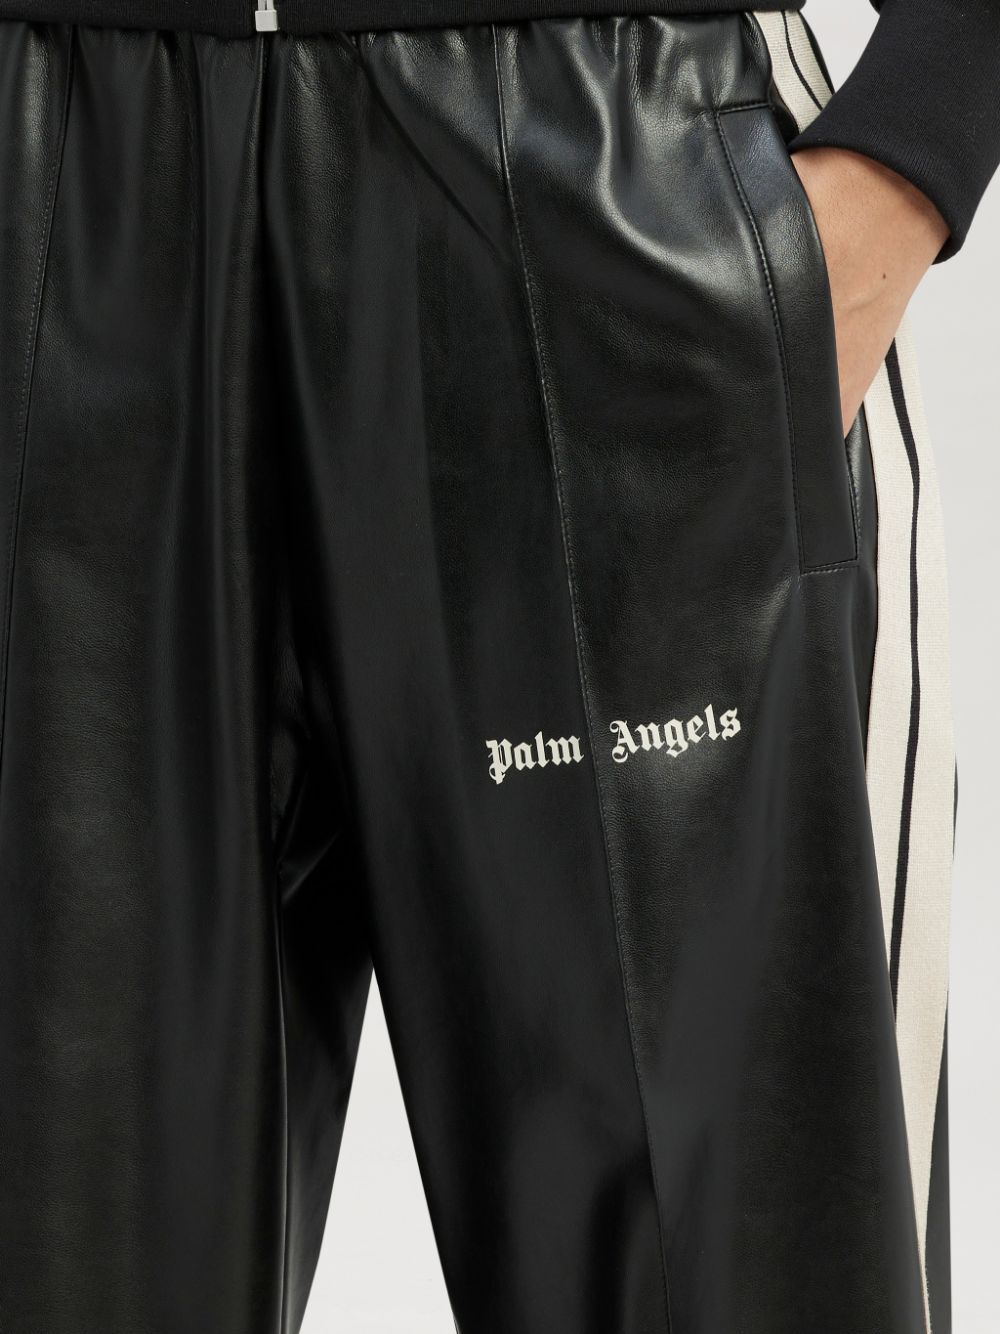 PALM ANGELS BLACK PANTS